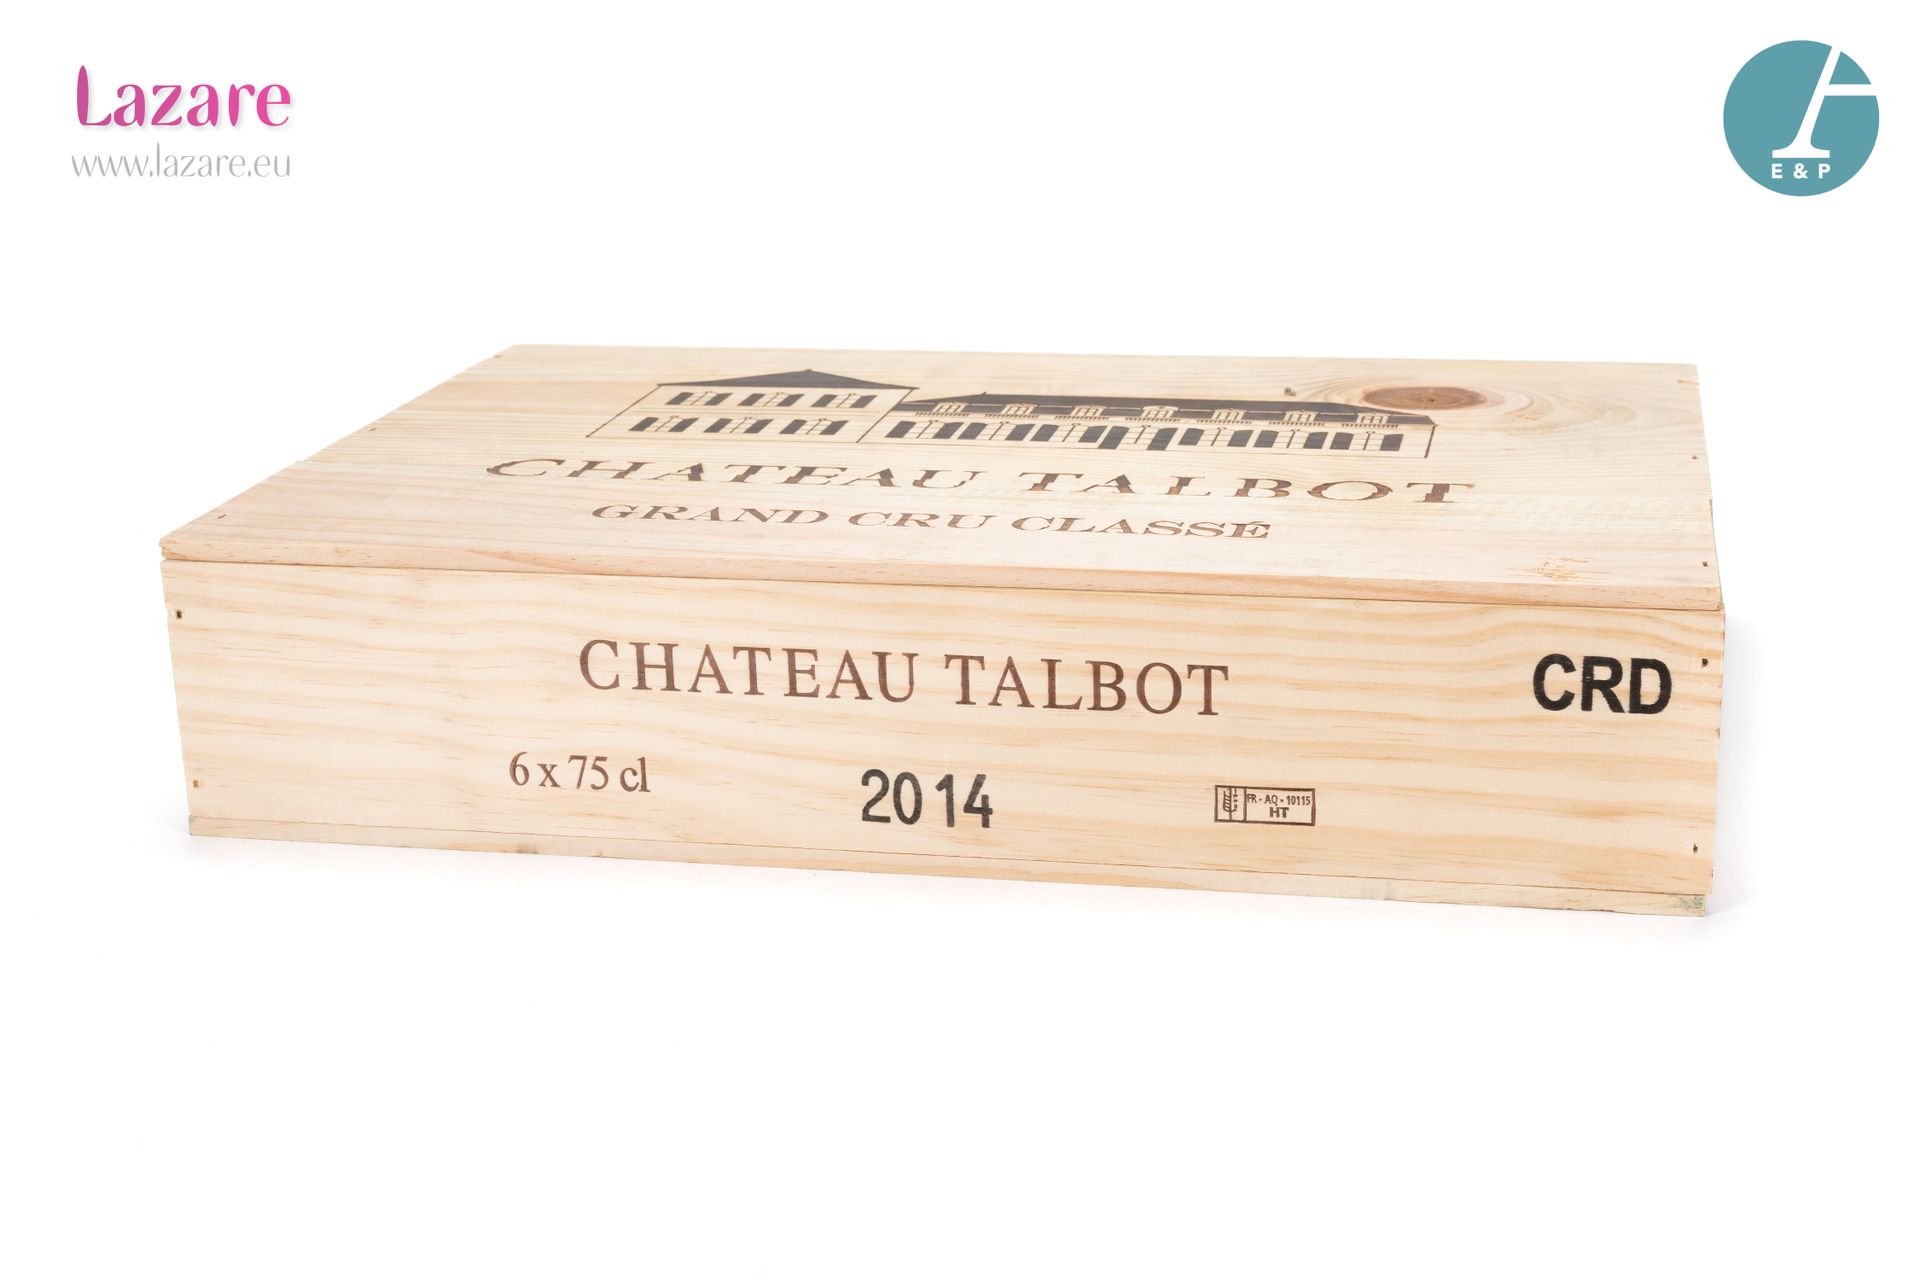 En provenance directe du château 6瓶 CHATEAU TALBOT (原木箱) 2014年圣朱利安四级酒庄葡萄酒